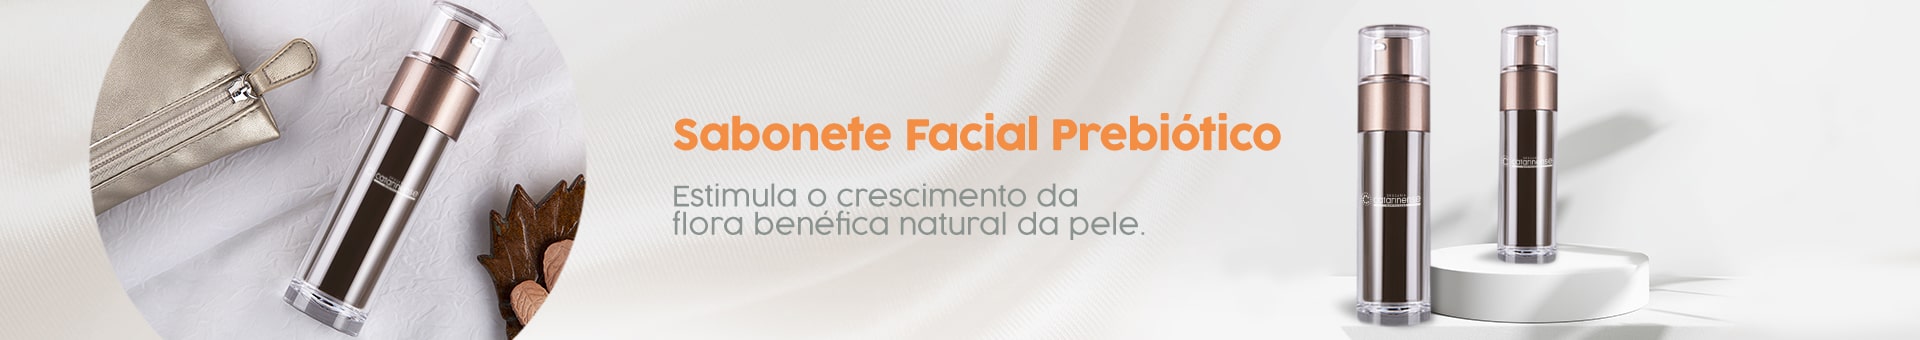 Sabonete facial - 09/08 a 10/09